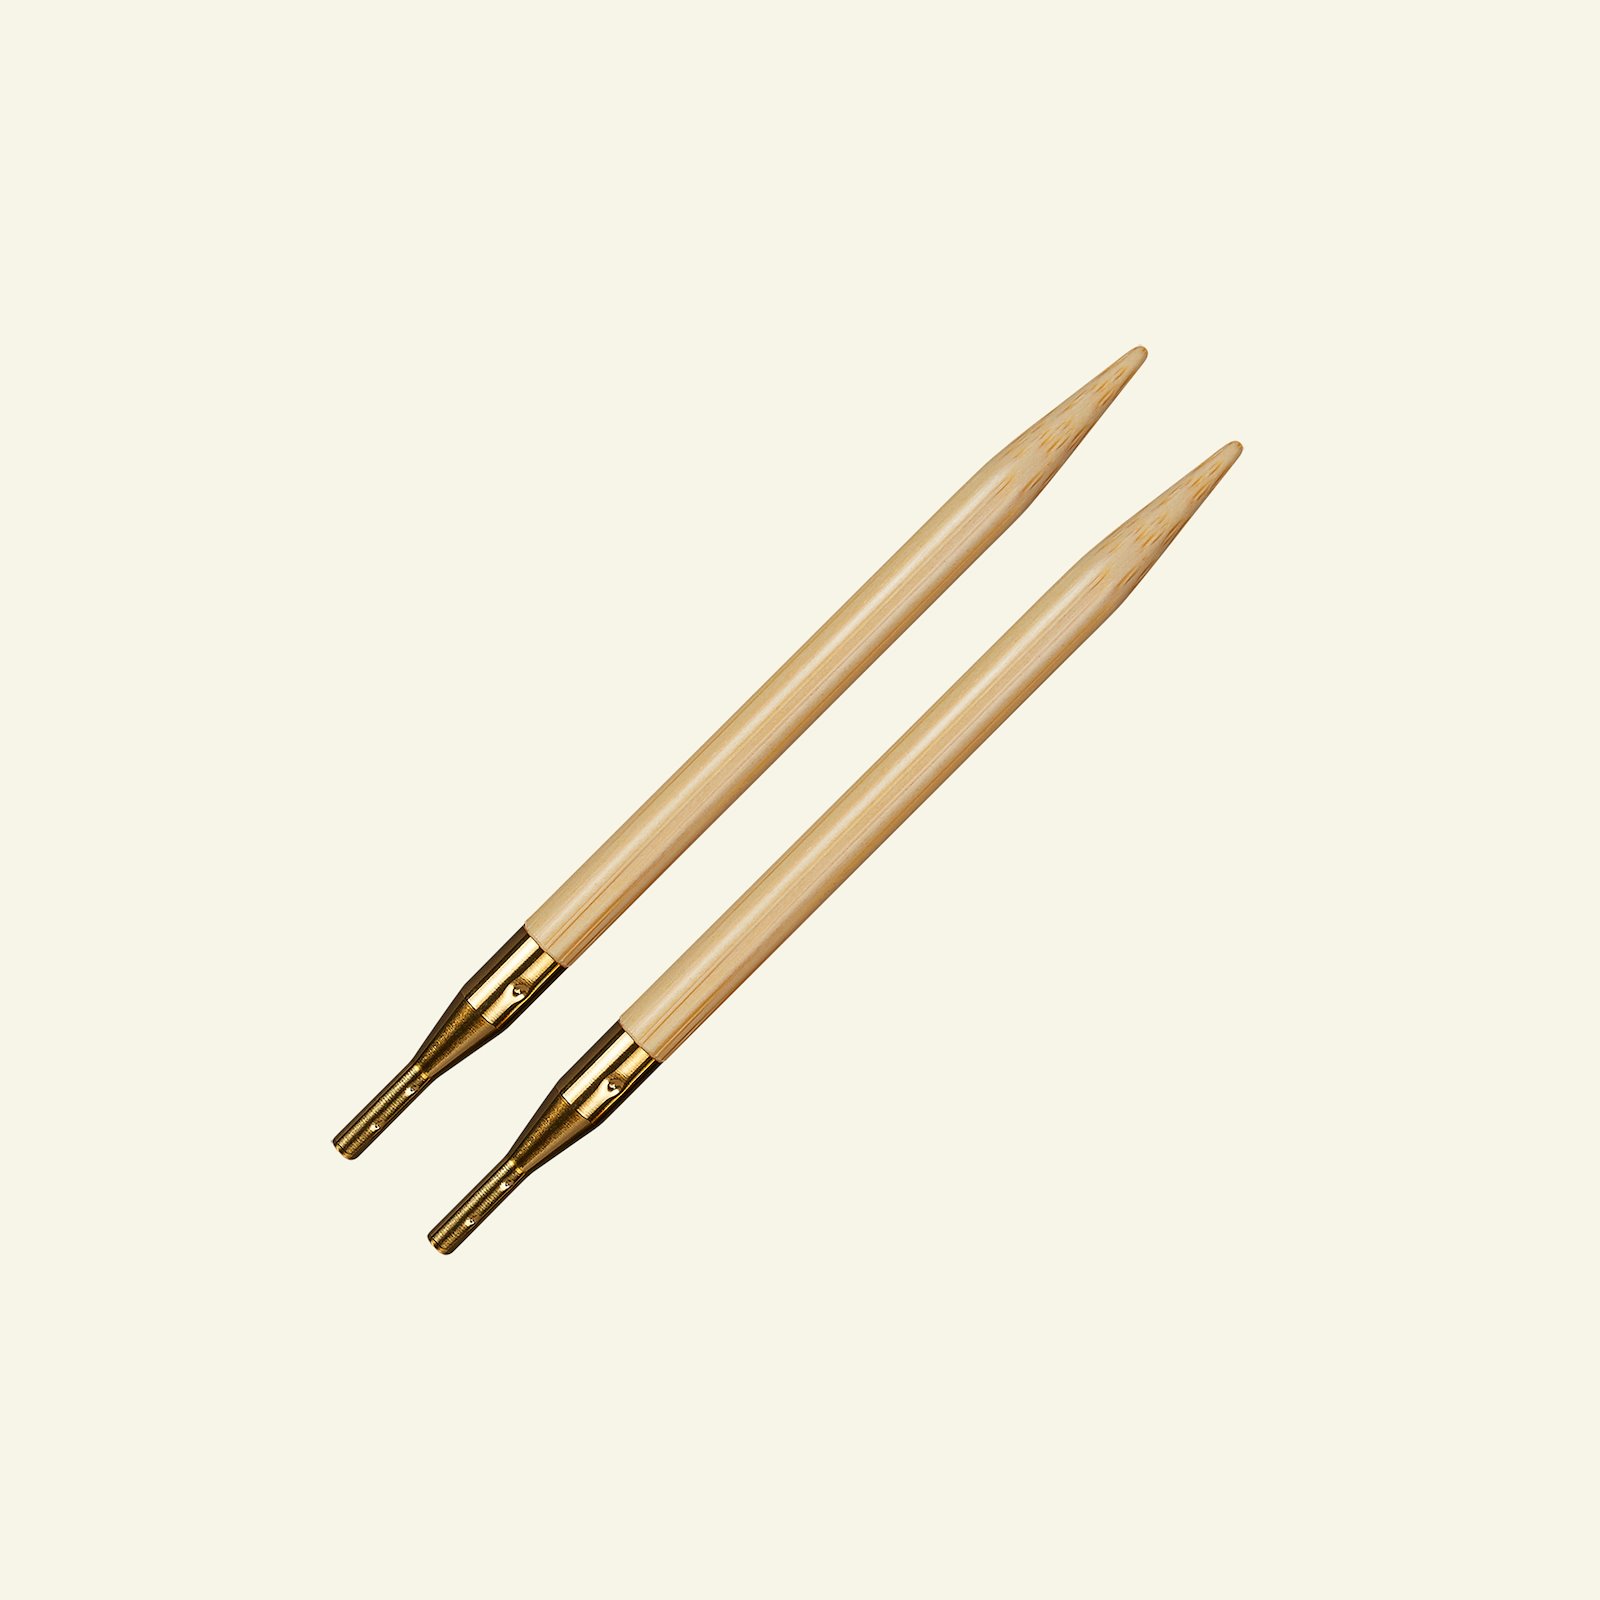 addiClick bambuspind str 3,5 mm. 1sæt 83281_pack